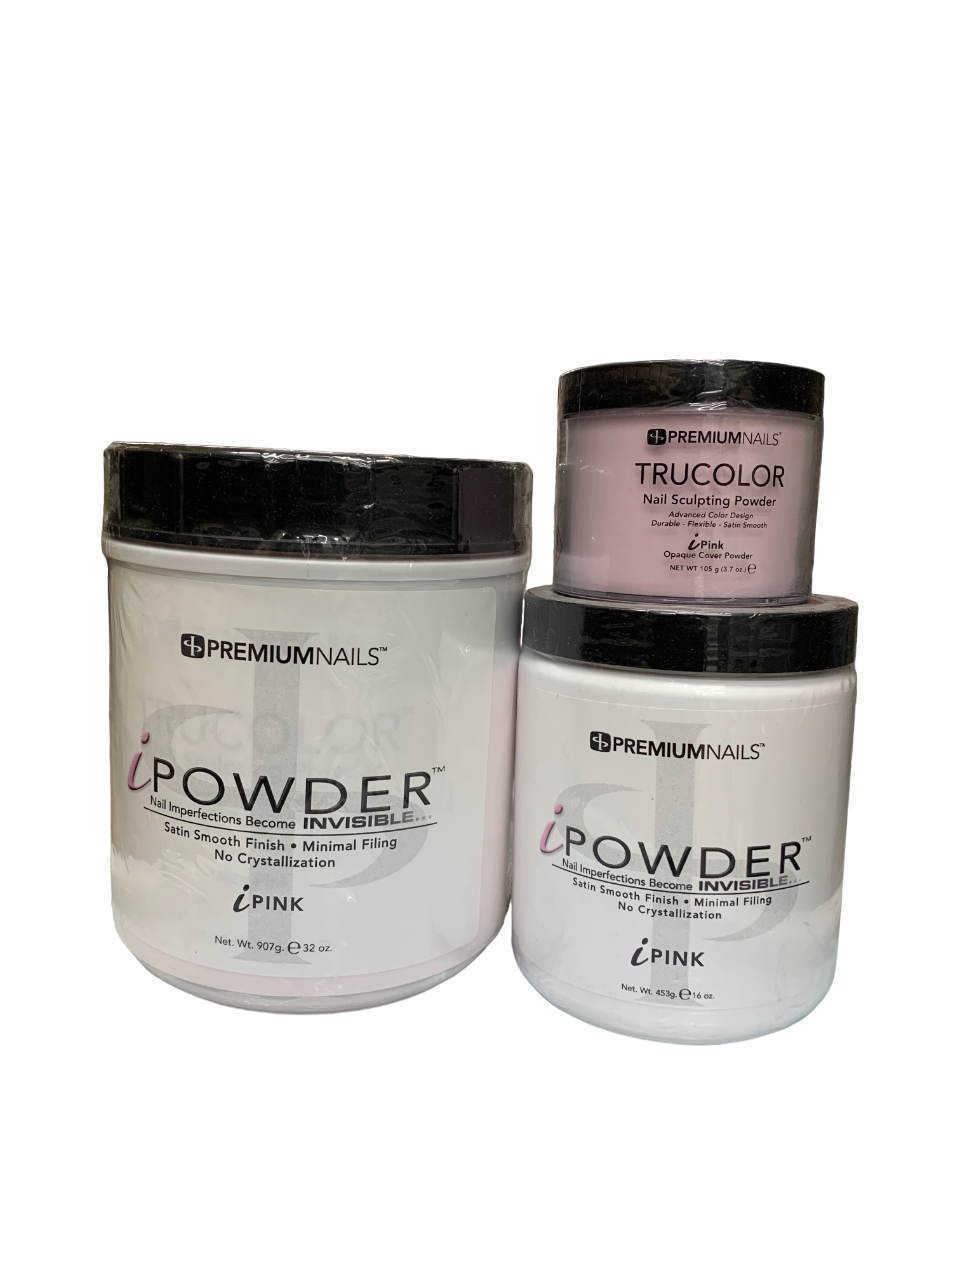 Premiumnails Trucolor Acrylic Powder - TCIP - iPink